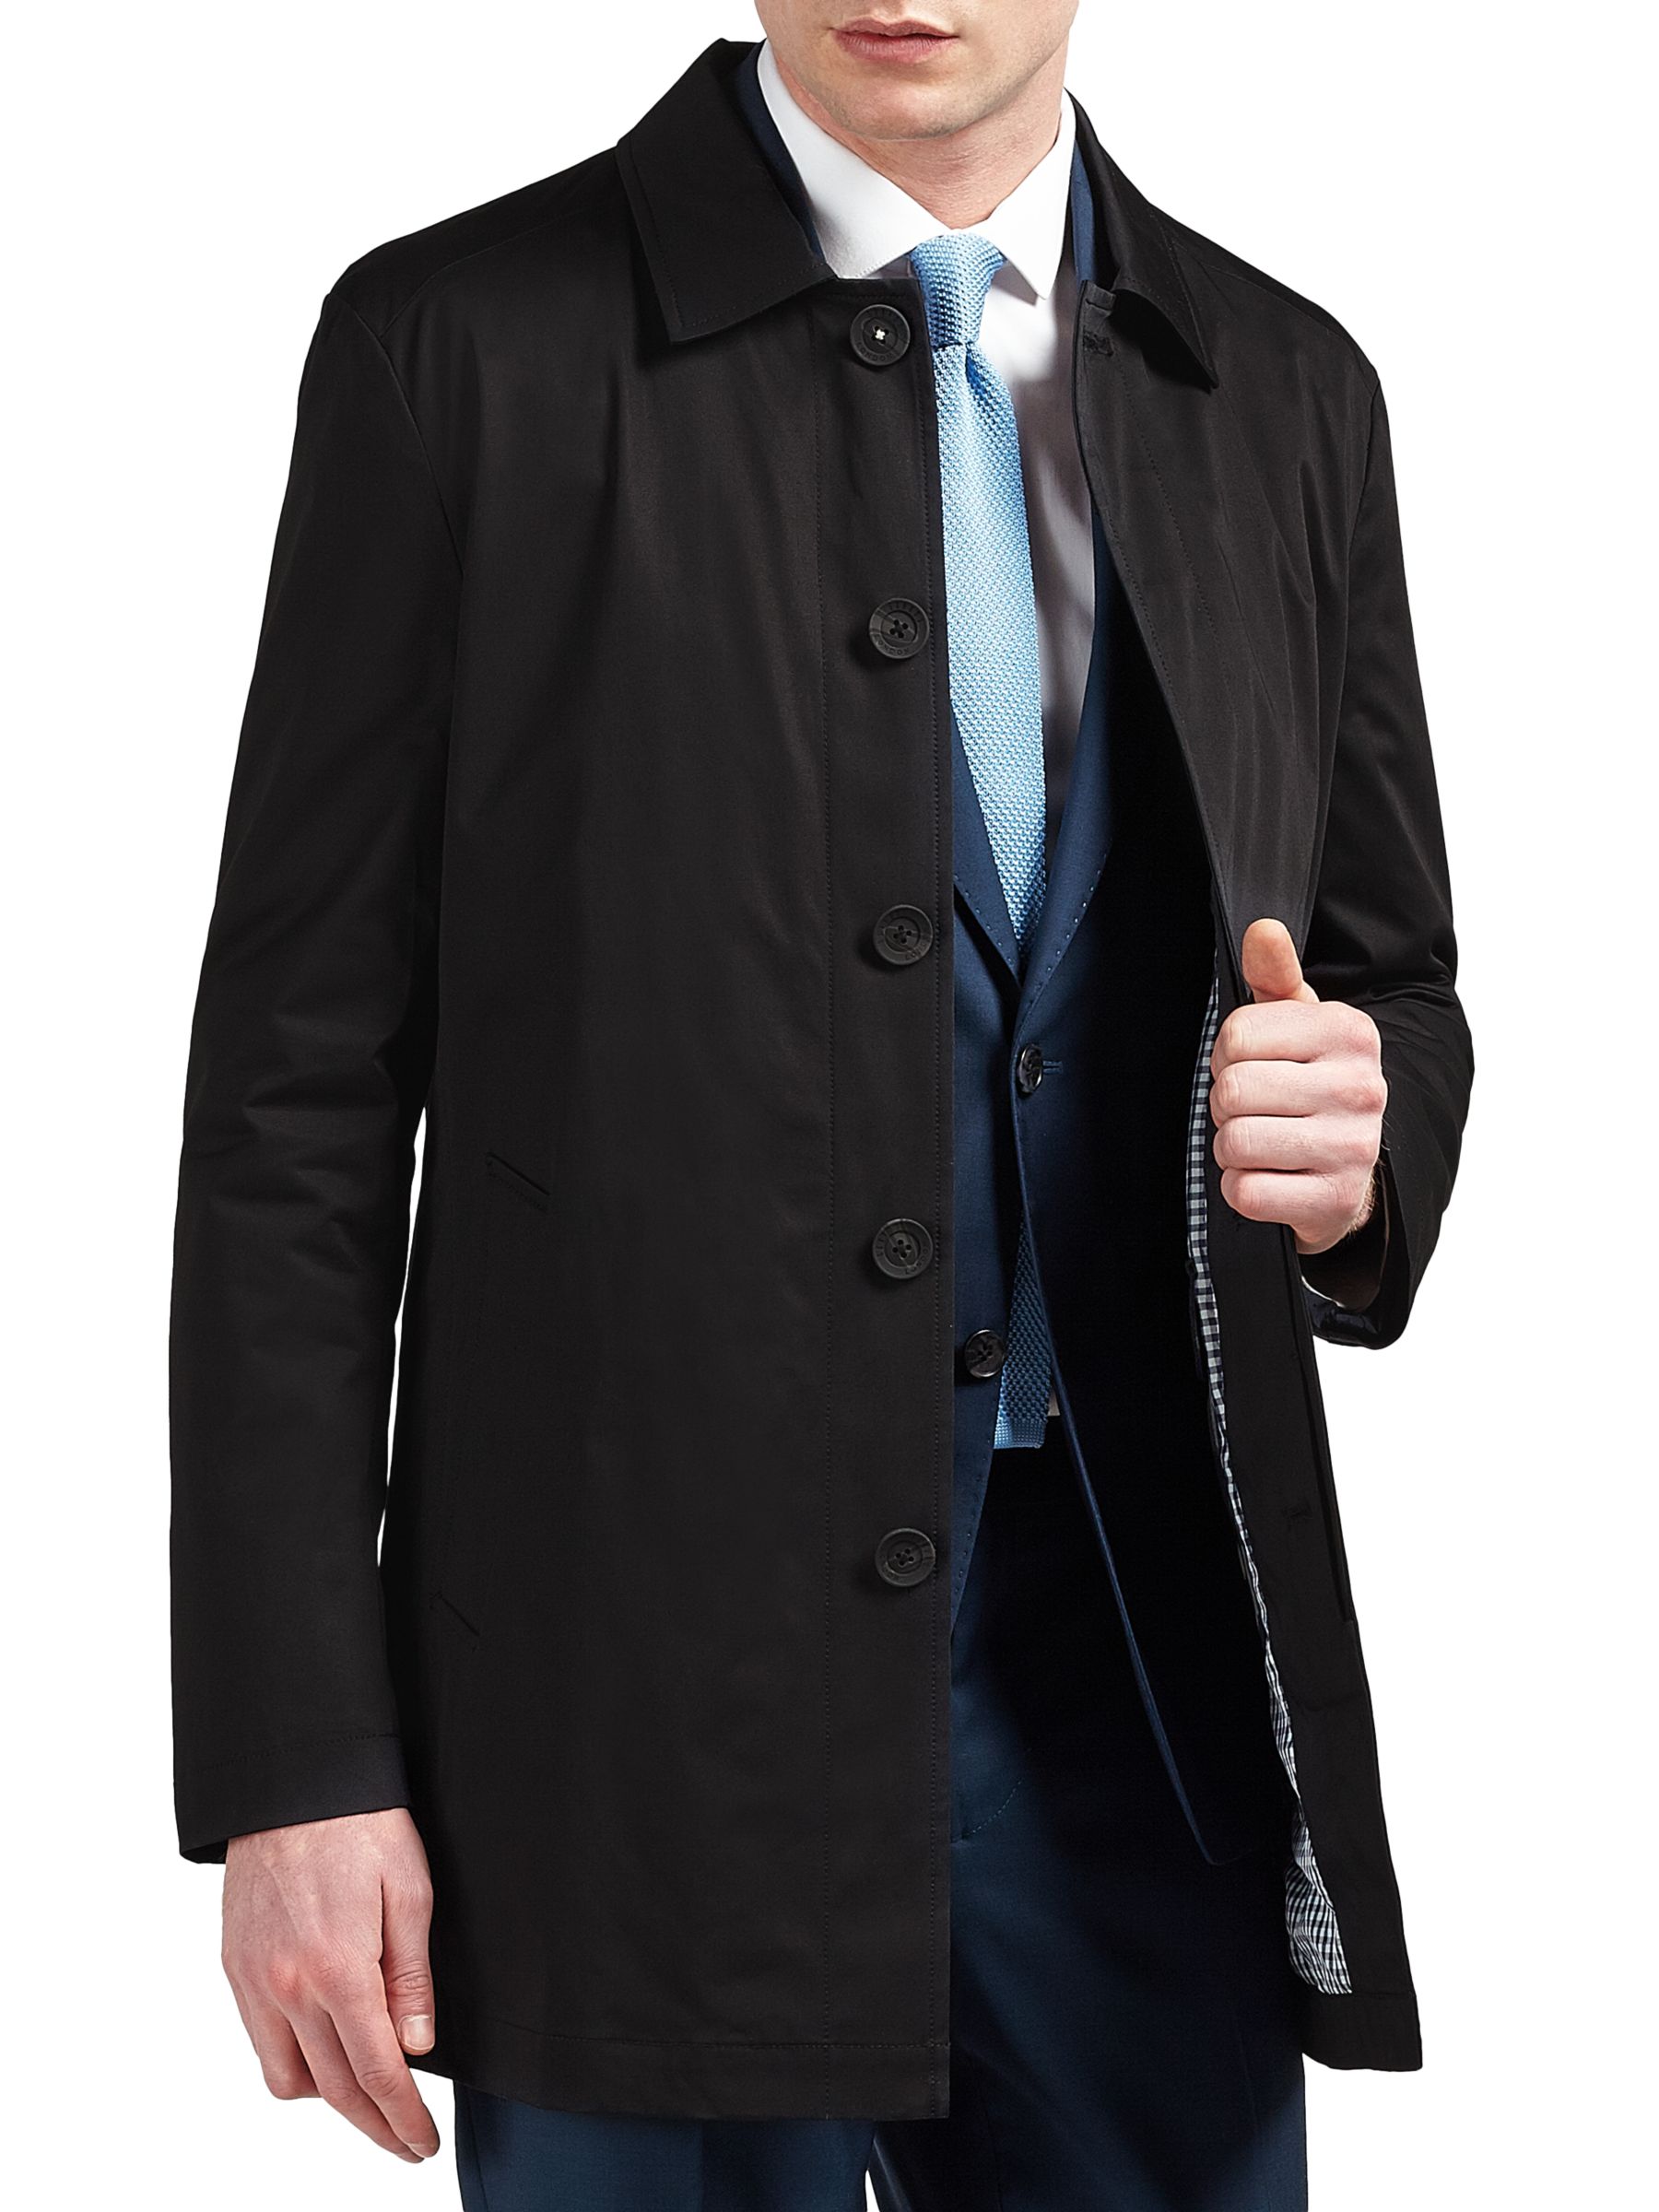 Guards London Water Resistant Tailored Shortie Raincoat, Black, 42R